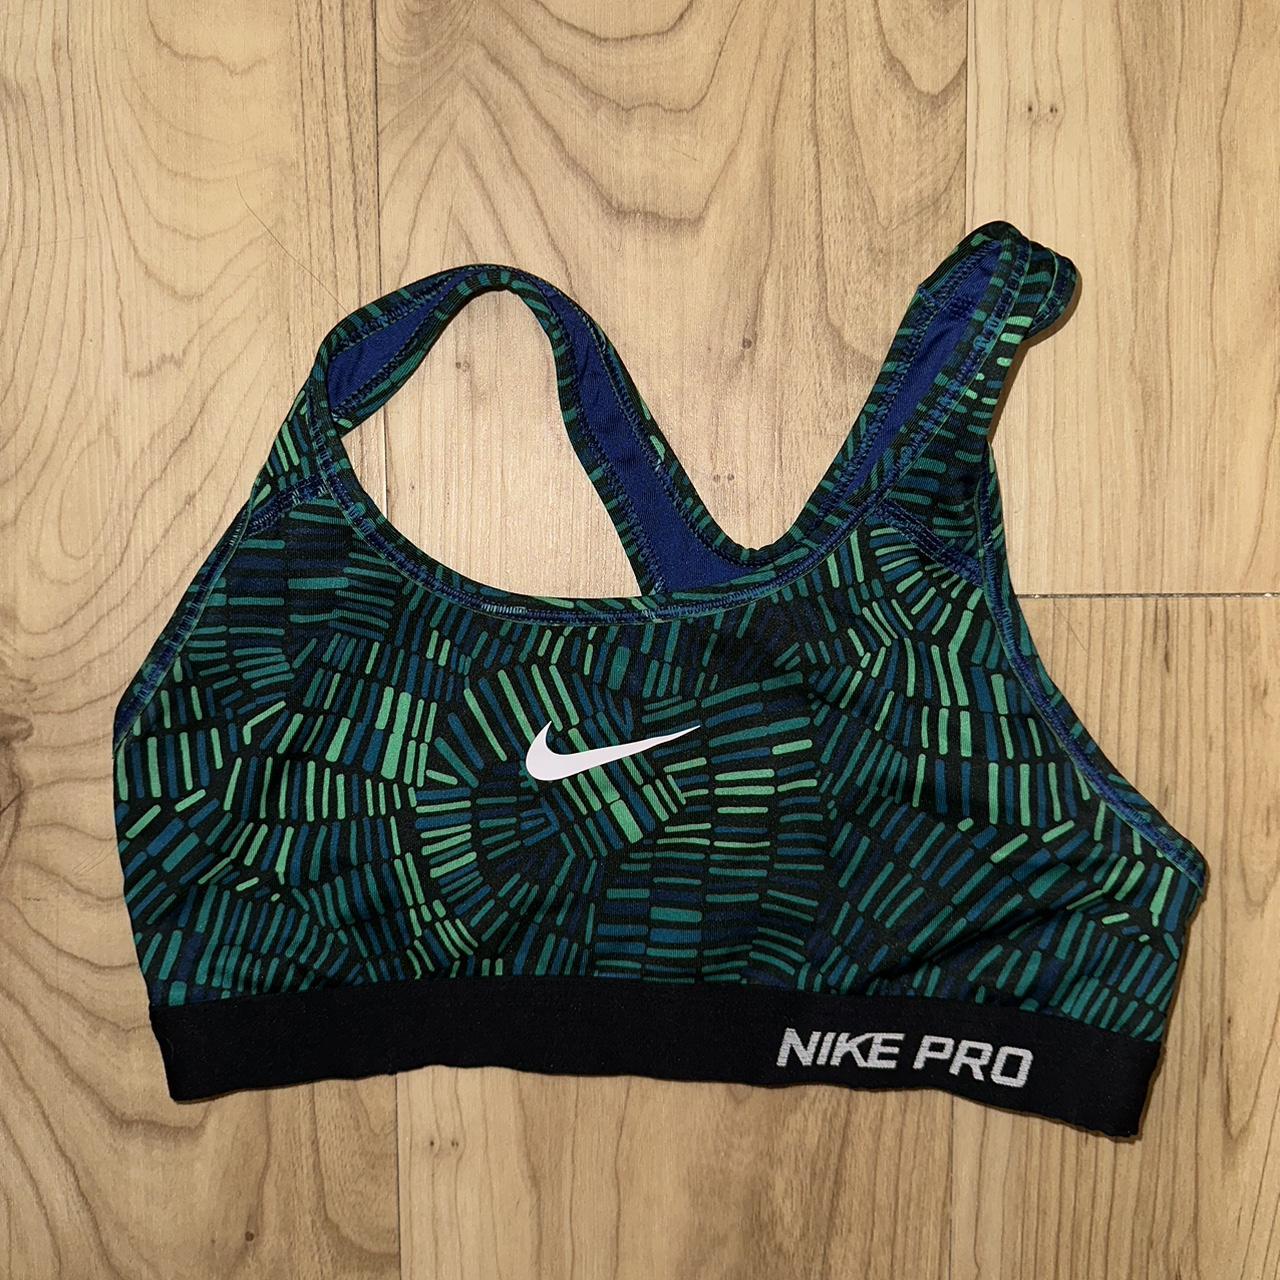 Nike swoosh pocket bra Original price 59.97 Fits - Depop